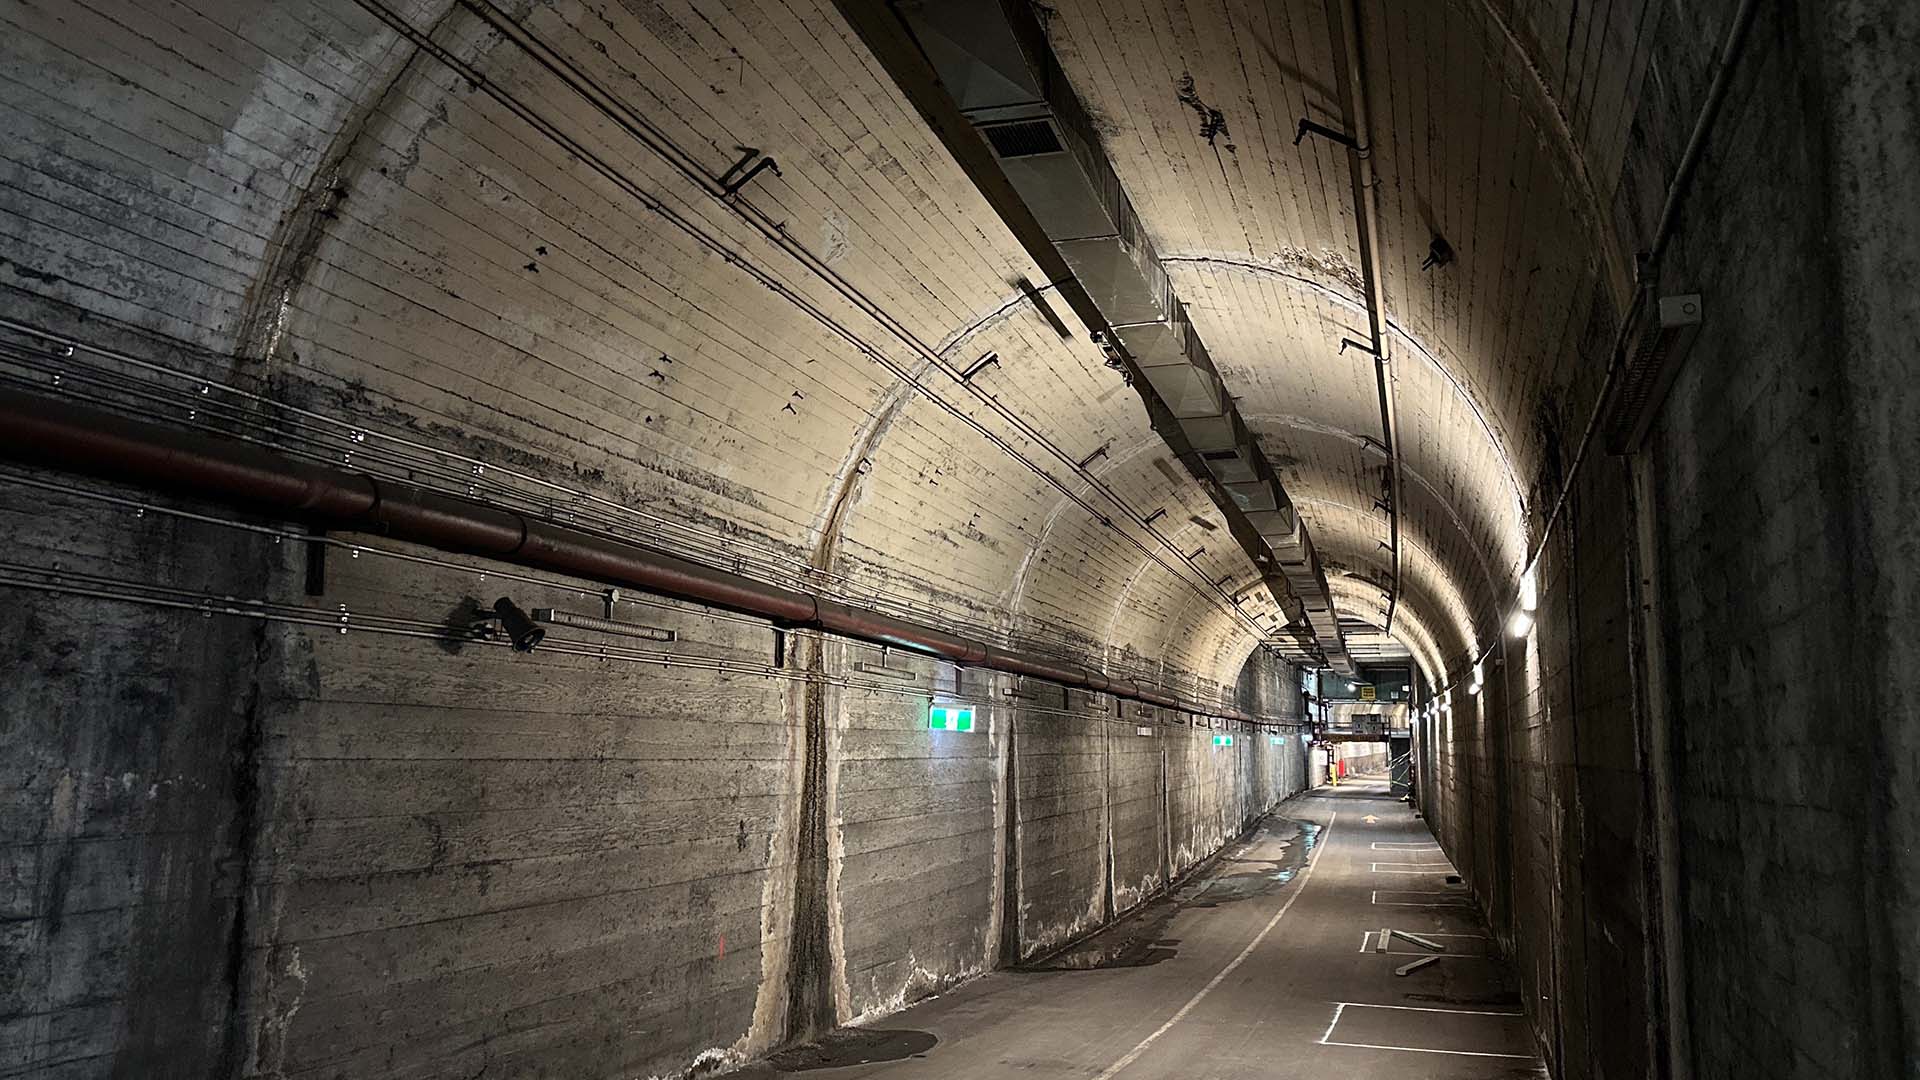 Vivid Sydney World Premiere 'Dark Spectrum' Will Fill 900 Metres of Wynyard's Railway Tunnels with Lasers